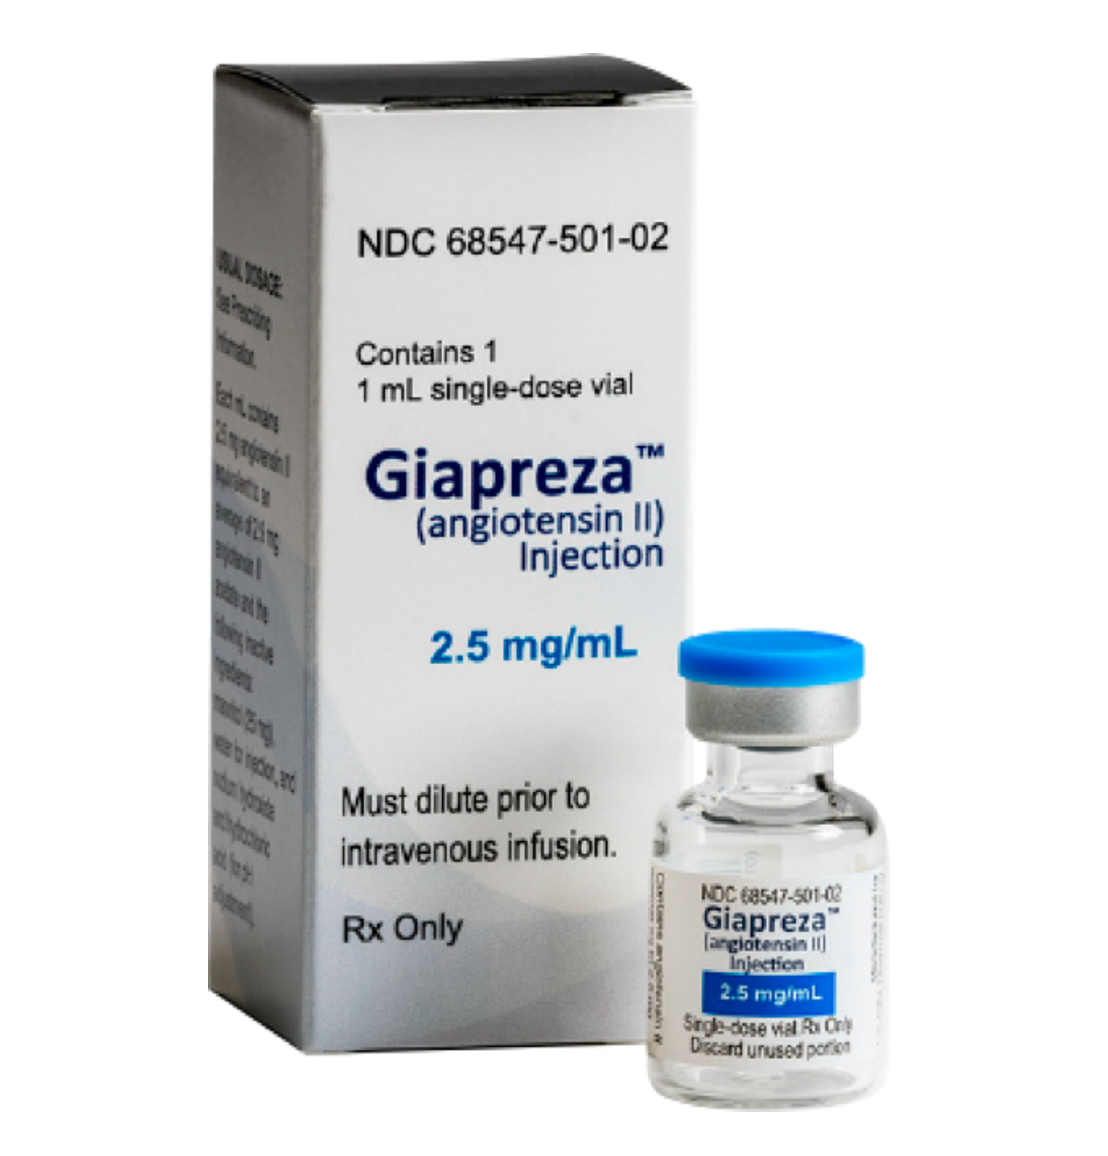 Daily Medication Pearl: Angiotensin II (Giapreza) Injection